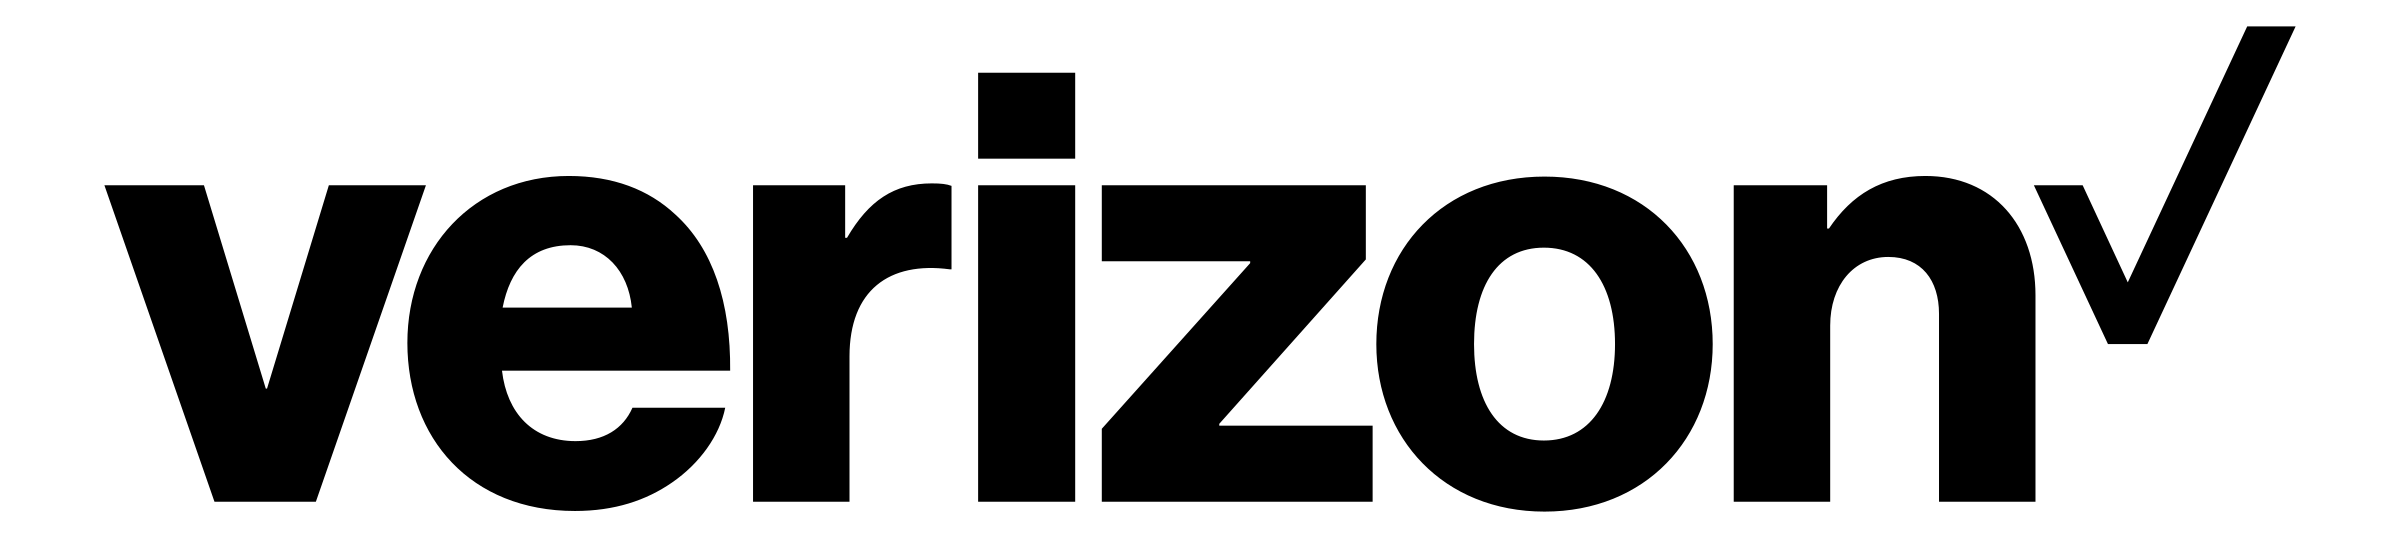 verizon-logo-black-transparent.png